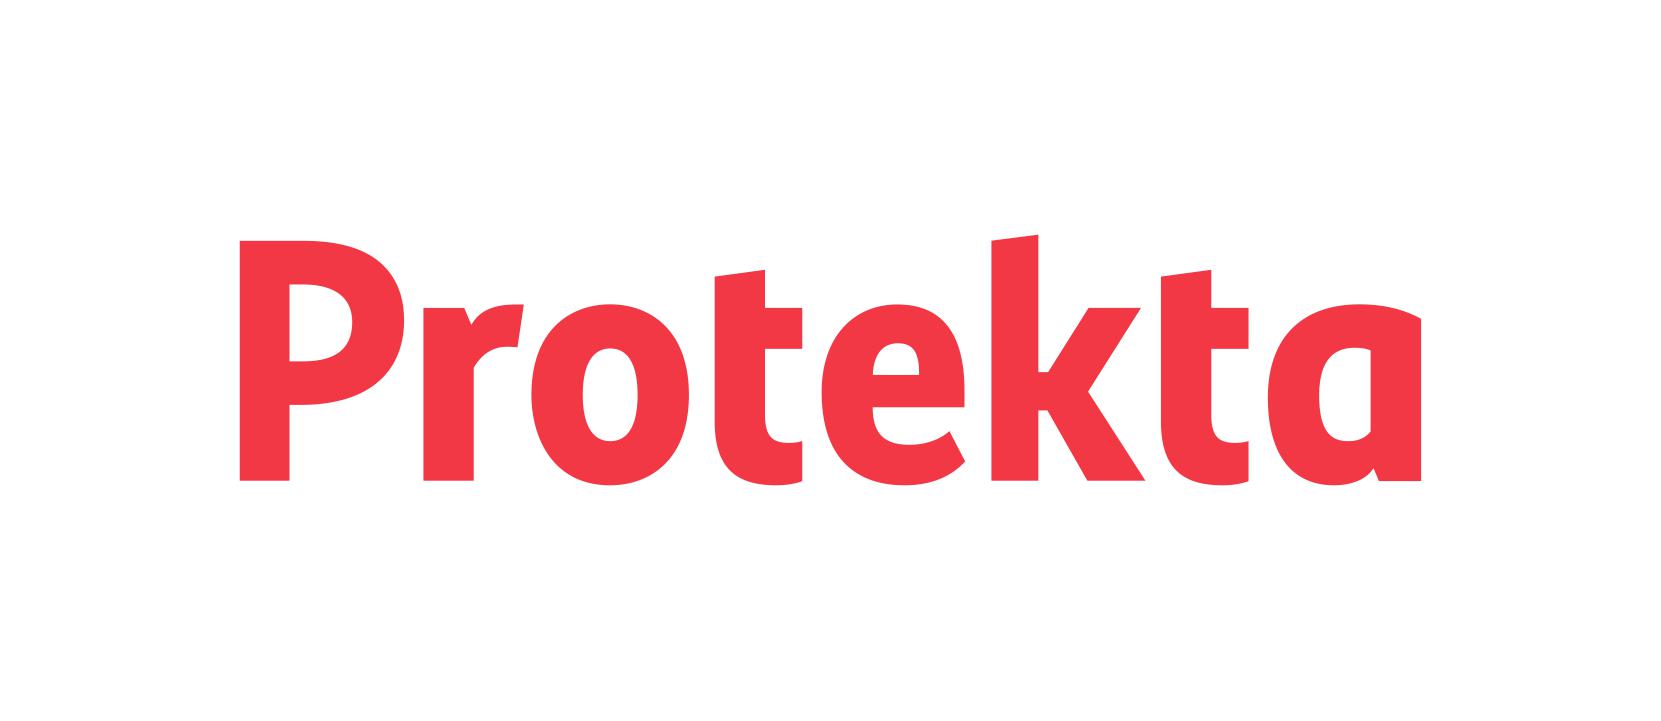 protekta_logo.jpg